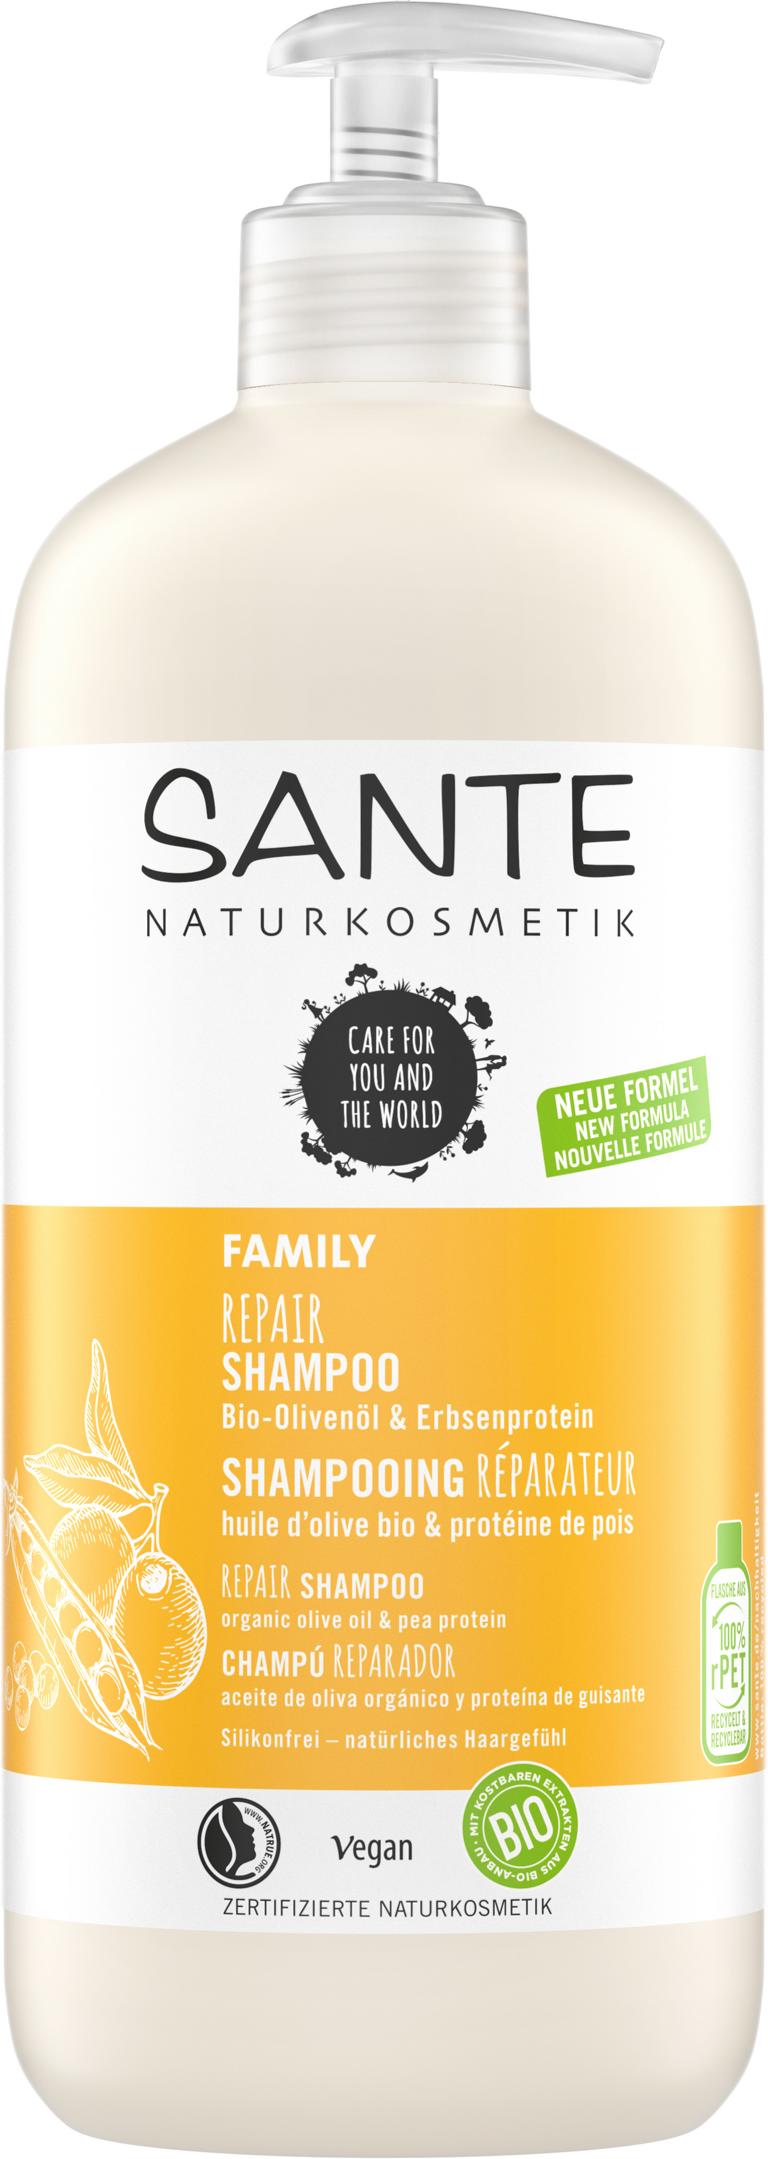 Sante FAMILY Repair Shampoo Bio-Olivenöl & Erbsenprotein 500ml